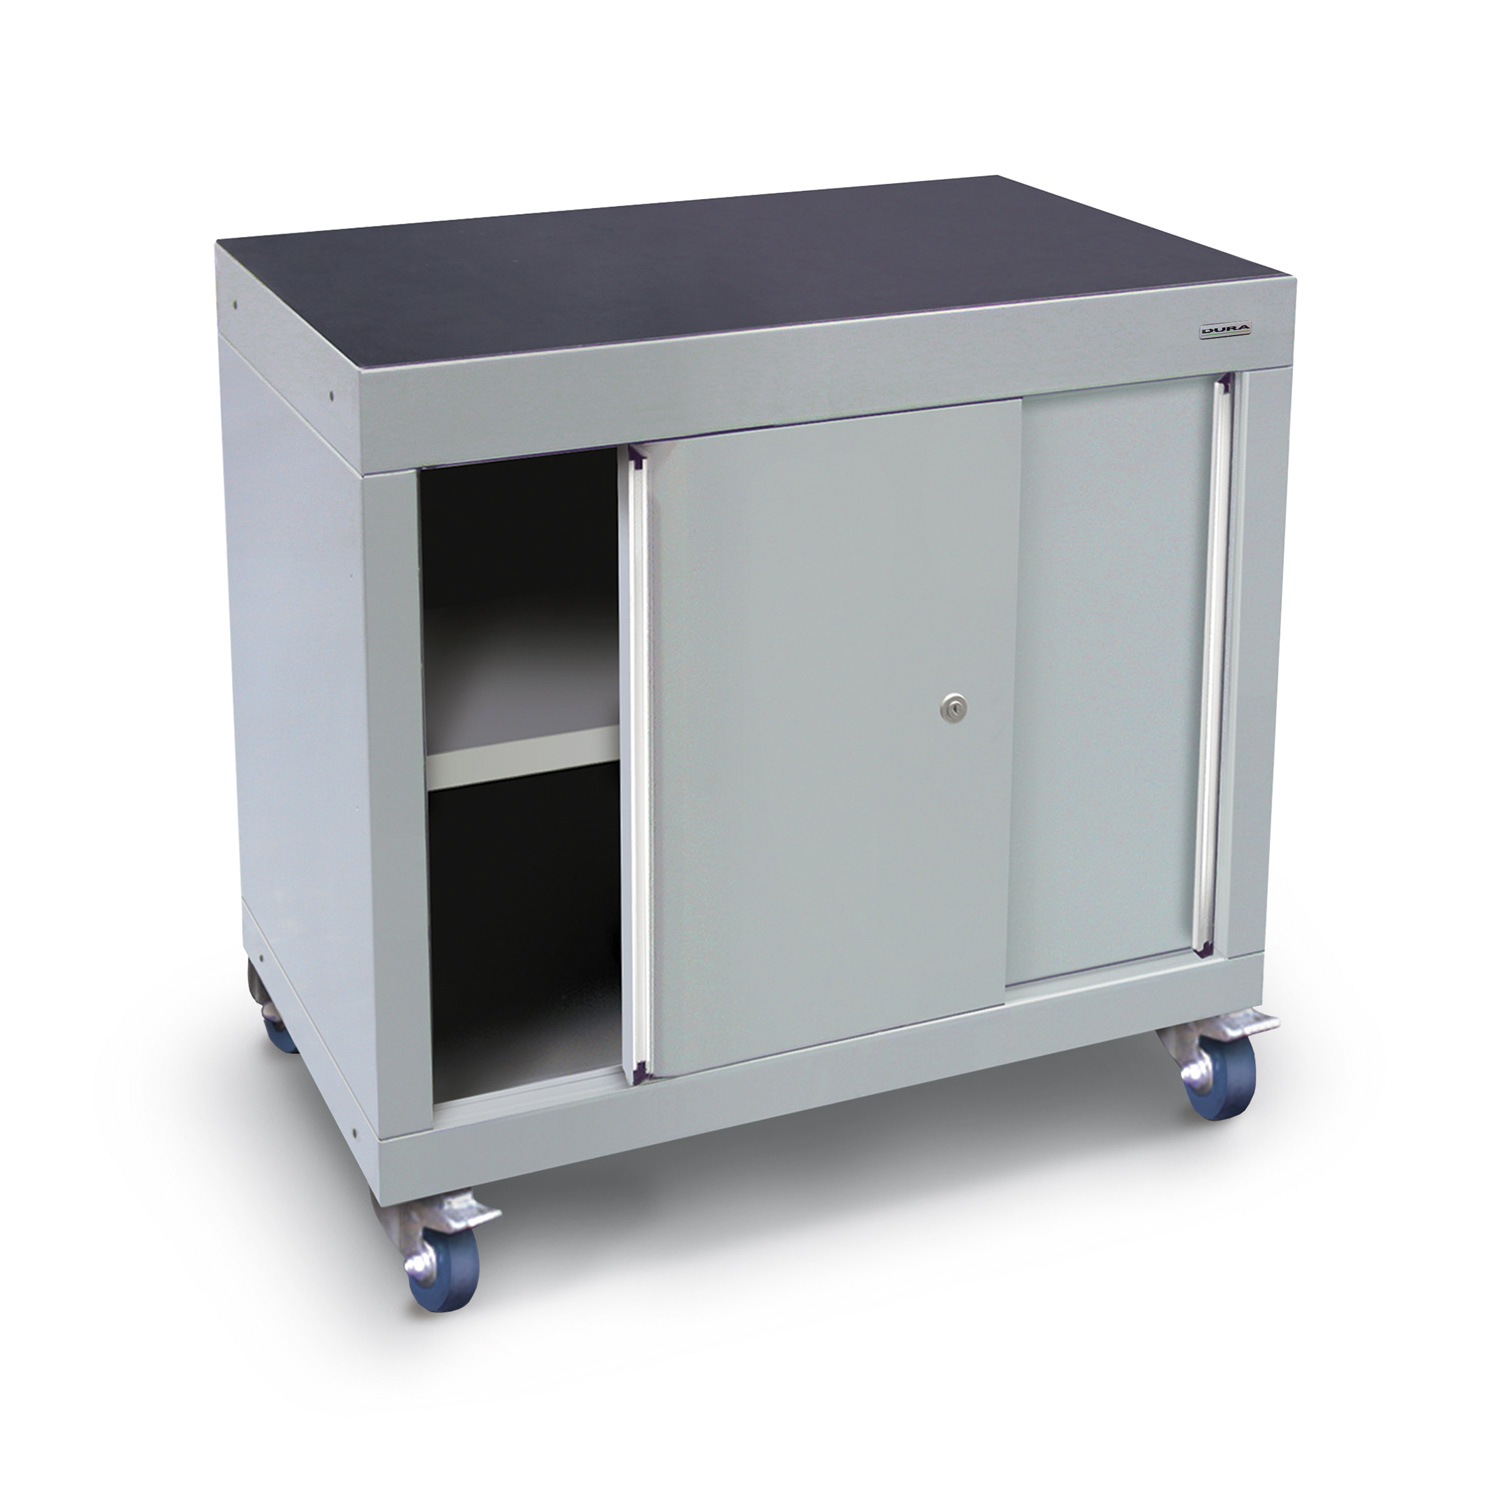 900mm wide base cabinet (double sliding doors/castors)